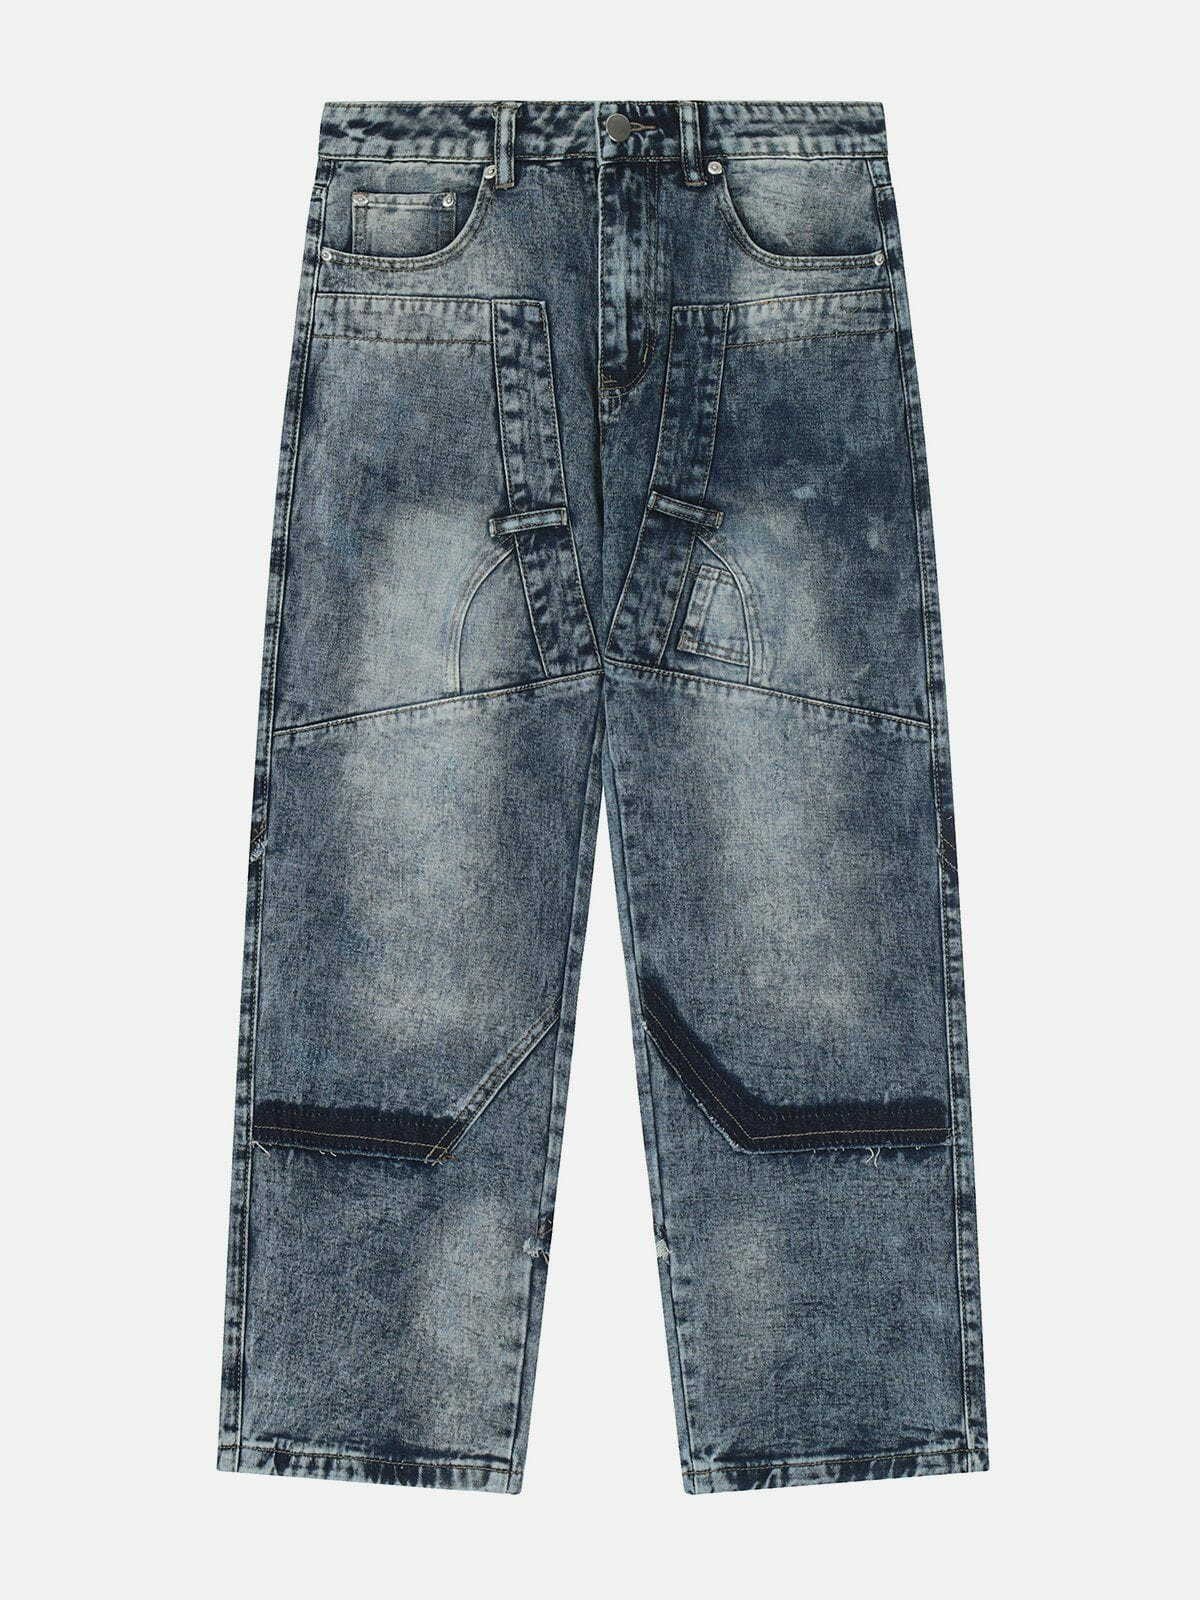 vibrant gradient jeans edgy & trendy streetwear 2861